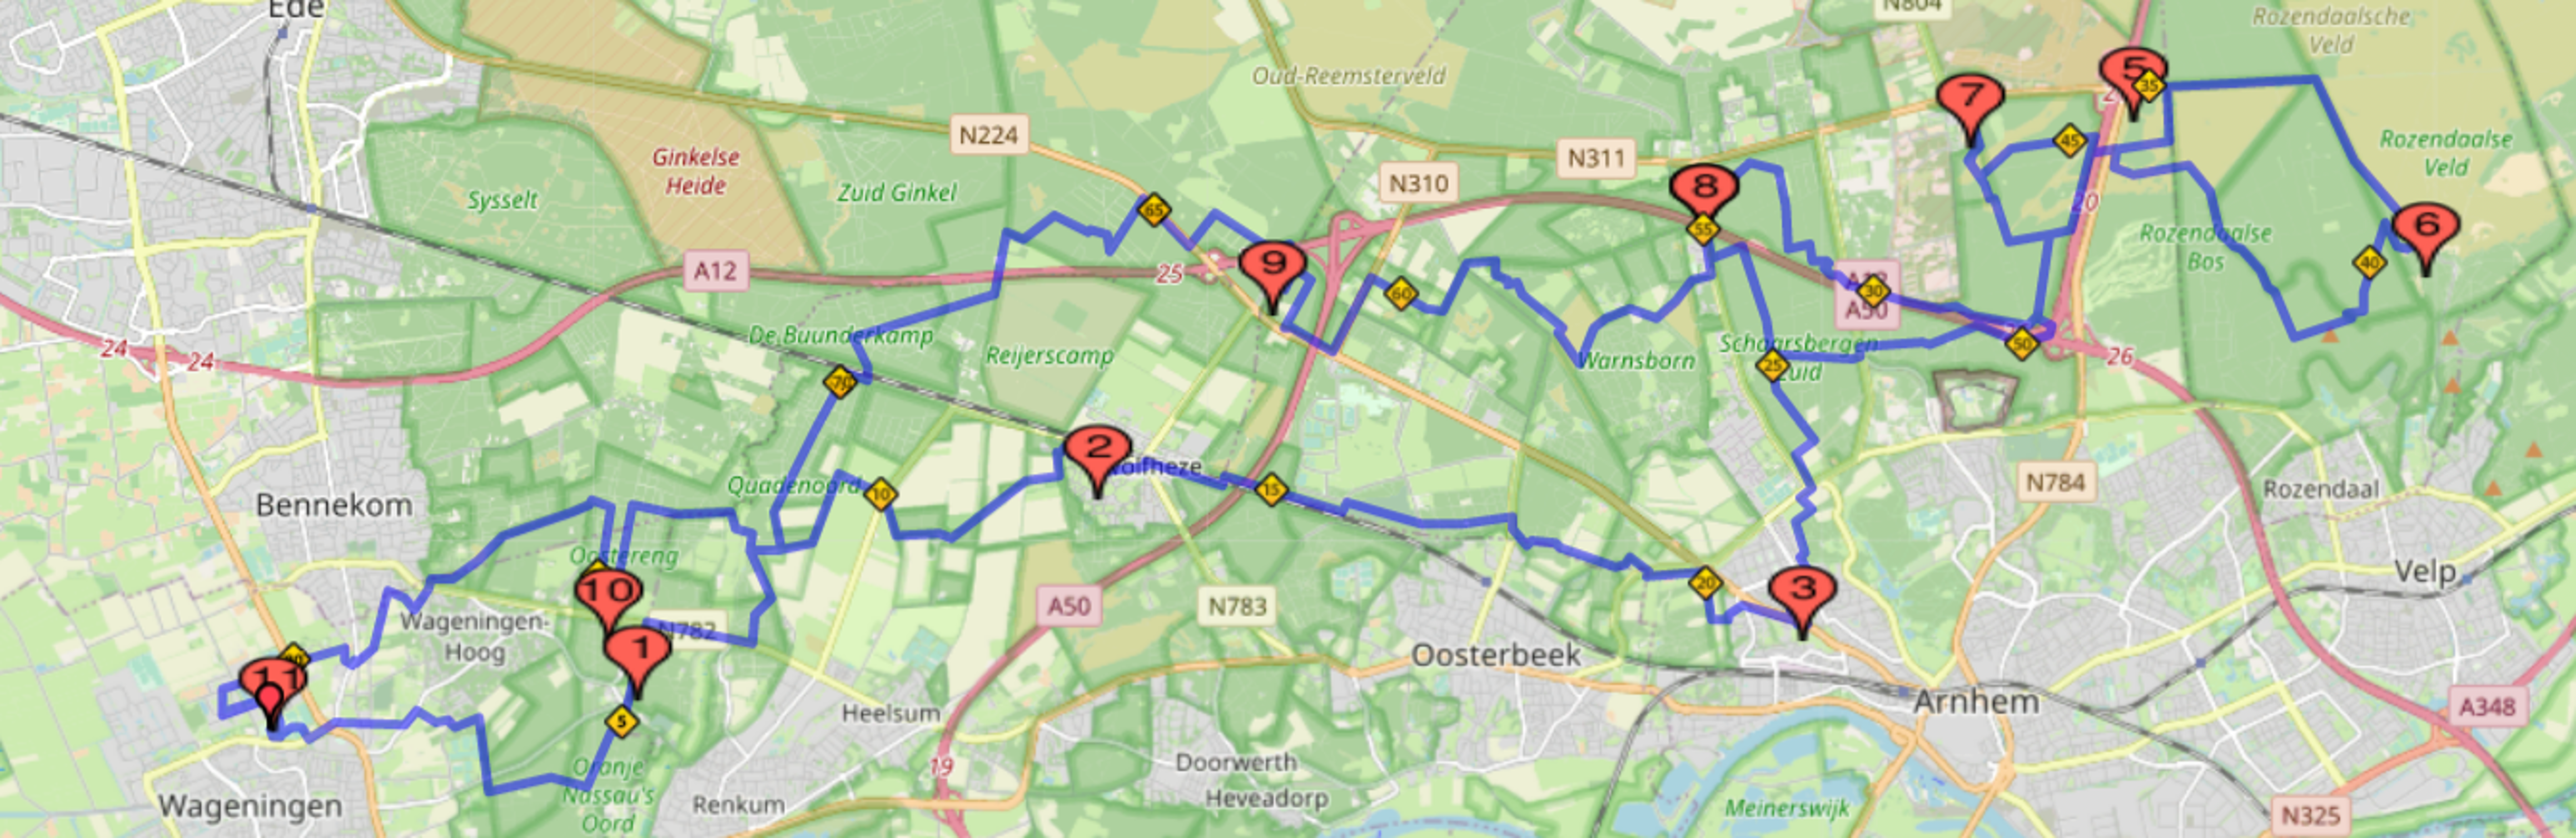 route Veluweloop 2022 (1)